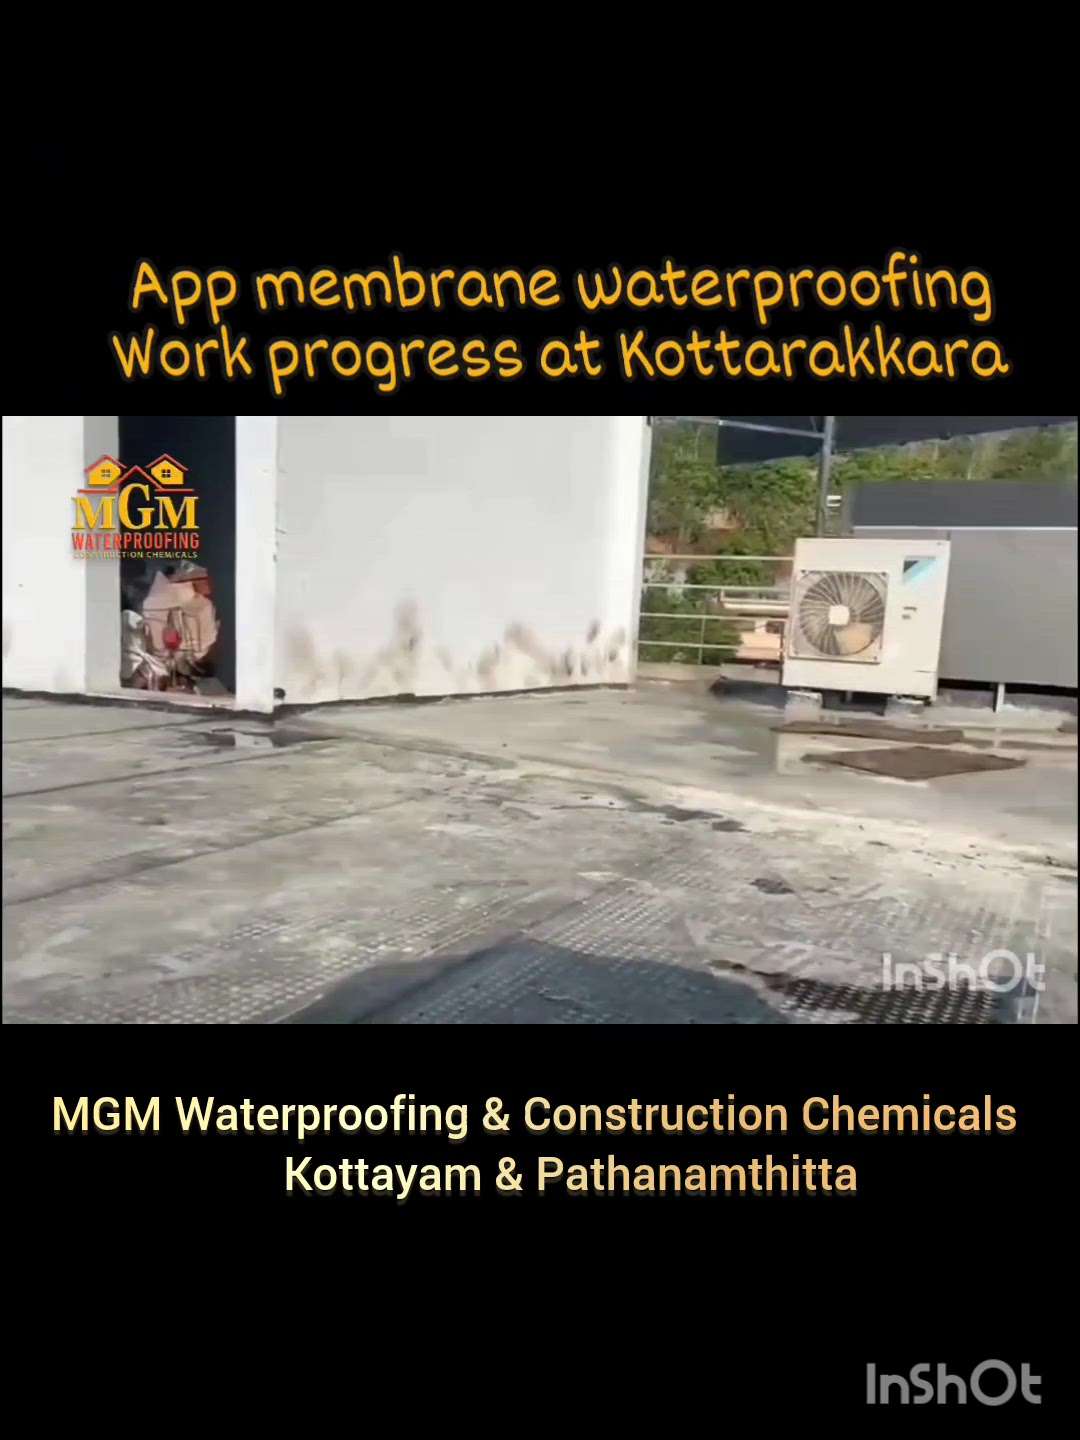 Waterproofing work progress at Kottarakkara, Kollam.
Method: Bitumen (APP) membrane 
Product:Sika Wp Shield 4 mm Plain 

#waterproofingproducts #waterproofing #constructionchemicals #tileadhesive #kottayam #pathanamthitta #alappuzha #kollam #idukki #sika